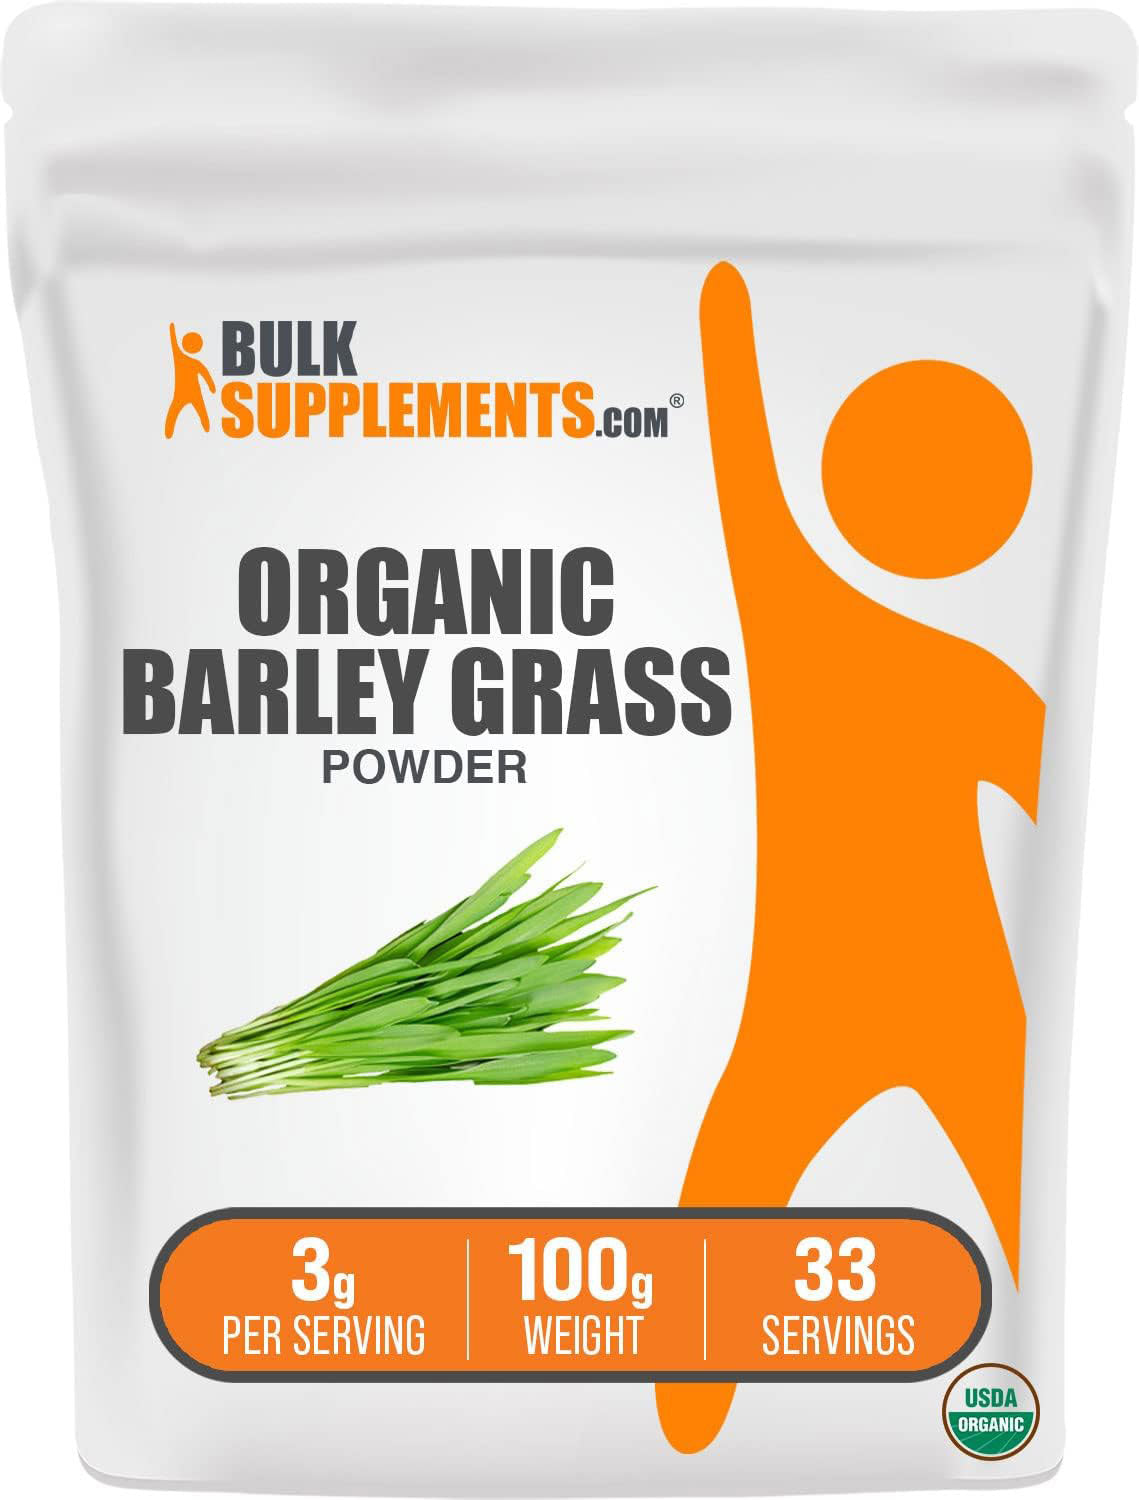 Organic Barley Grass Powder 100g bag with 33 servings at 3g per serving